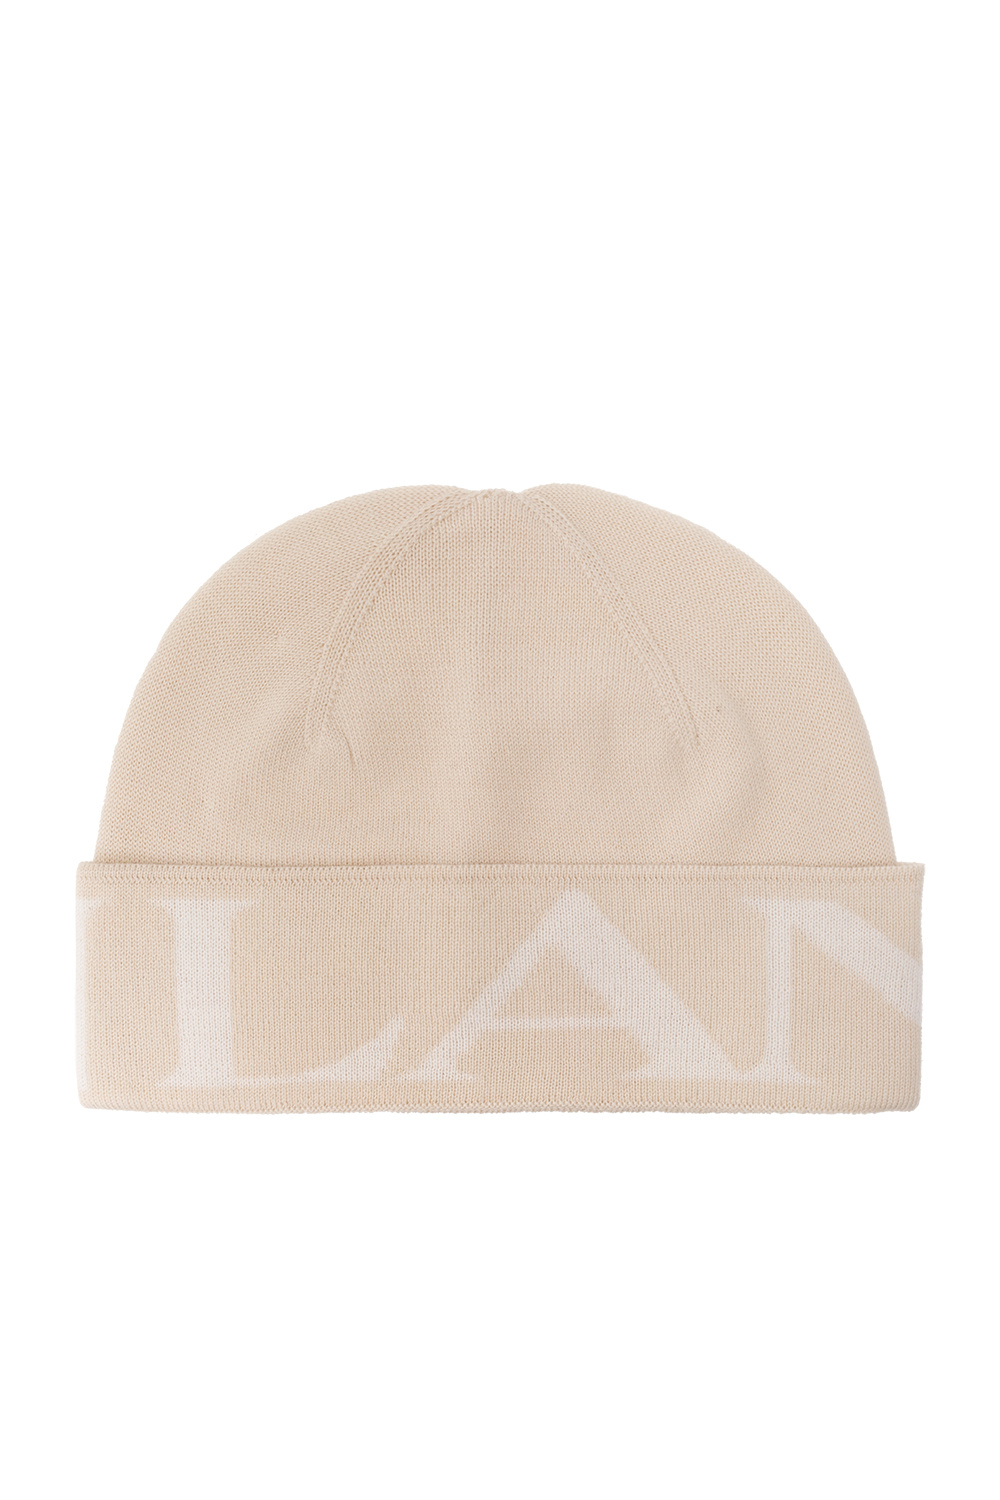 Hats Lanvin Women Women Accessories Lanvin Women Hats & Beanies Lanvin Women Hats Lanvin Women Hat LANVIN One blue 